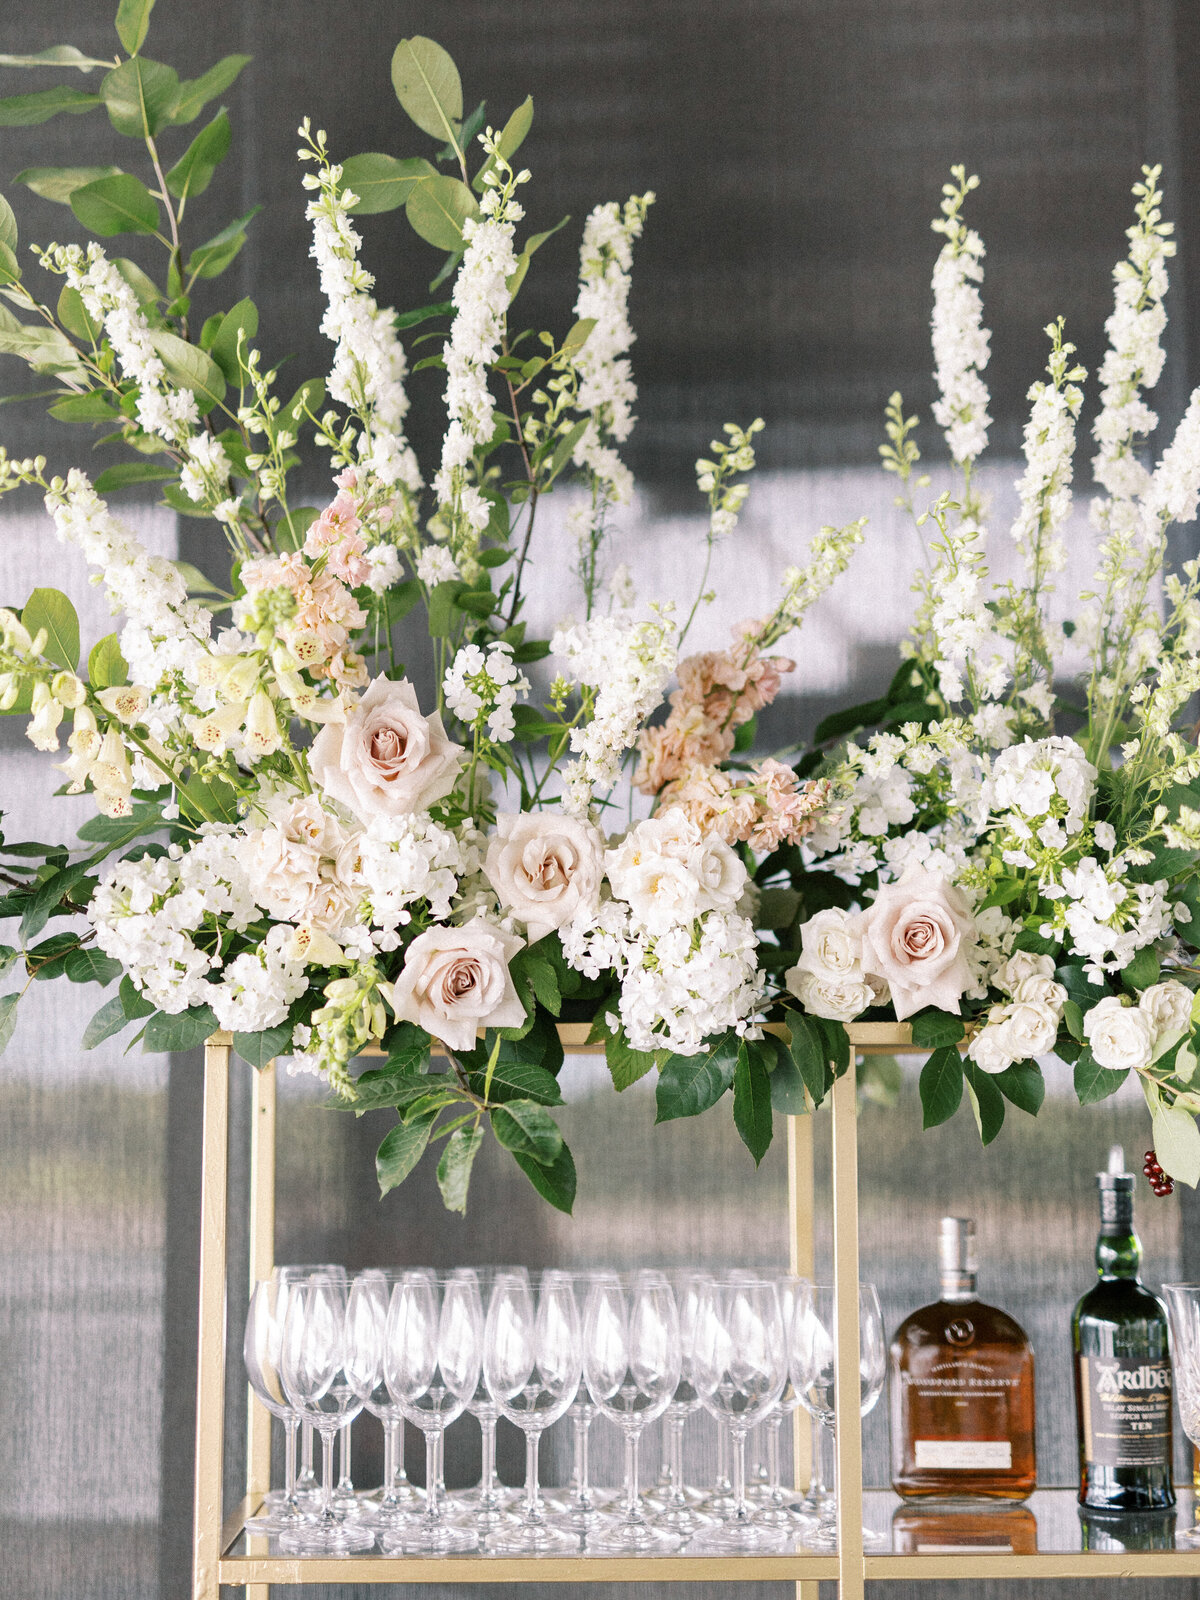 Atelier-Carmel-Wedding-Florist-GALLERY-Decor-37